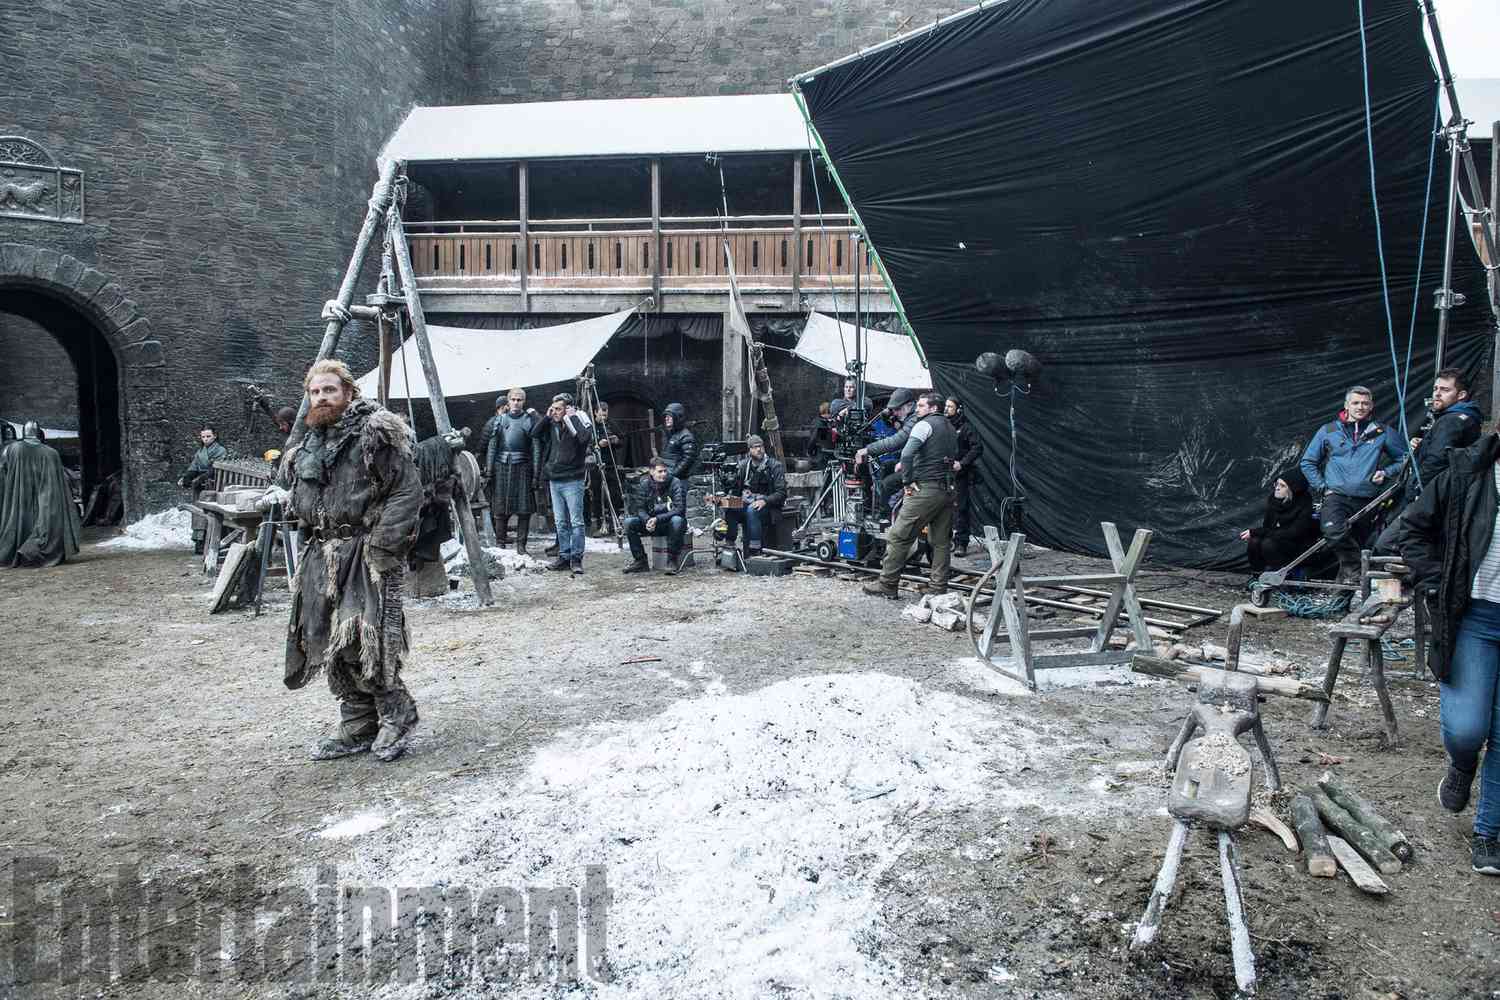 Tormund Giantsbane (Kristofer Hivju) doubtless hopes to see Brienne at Winterfell